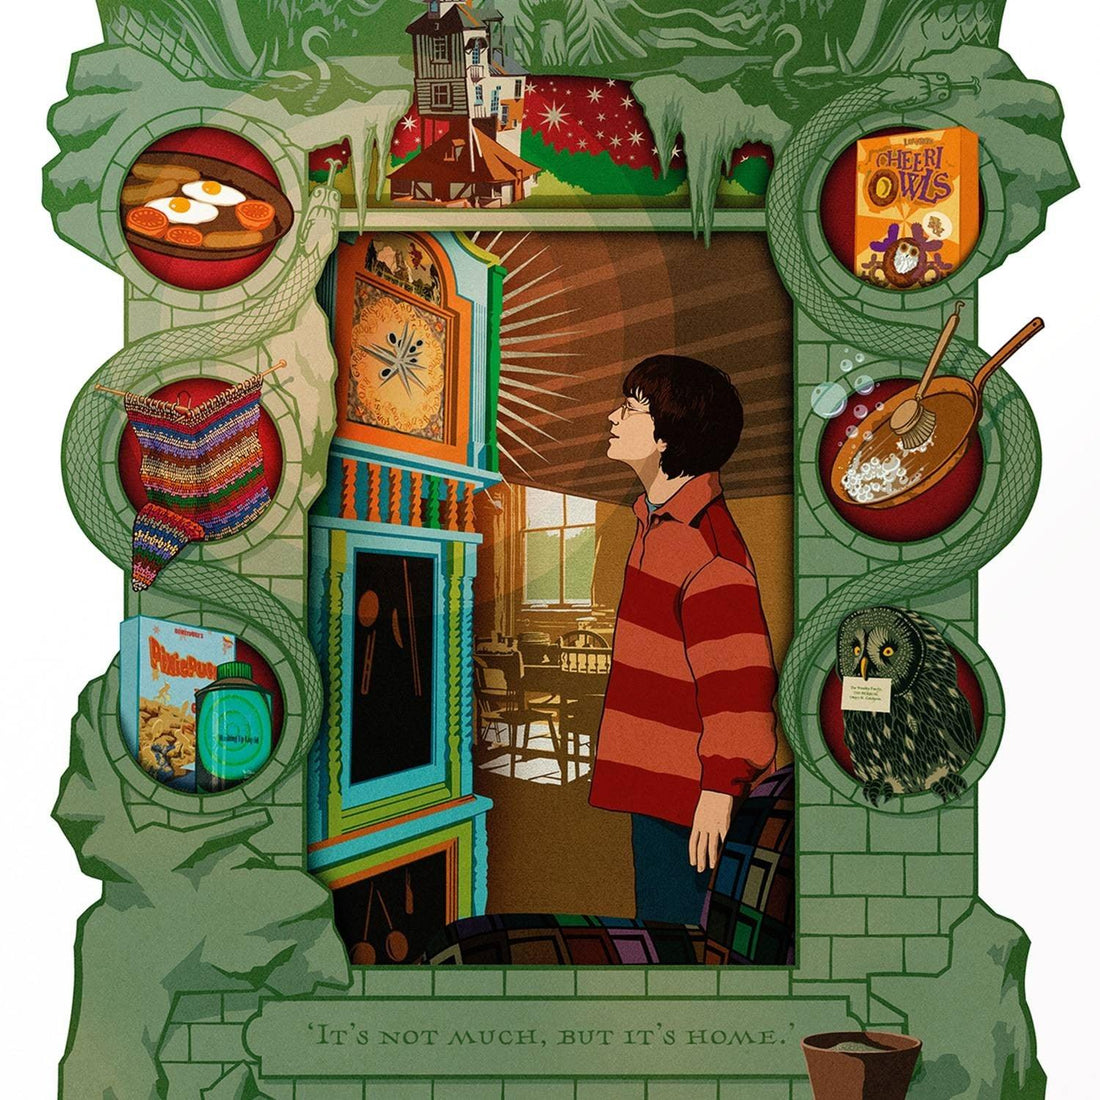 Carte postale Harry Potter par MinaLima - Horloge Weasley - La Muchette